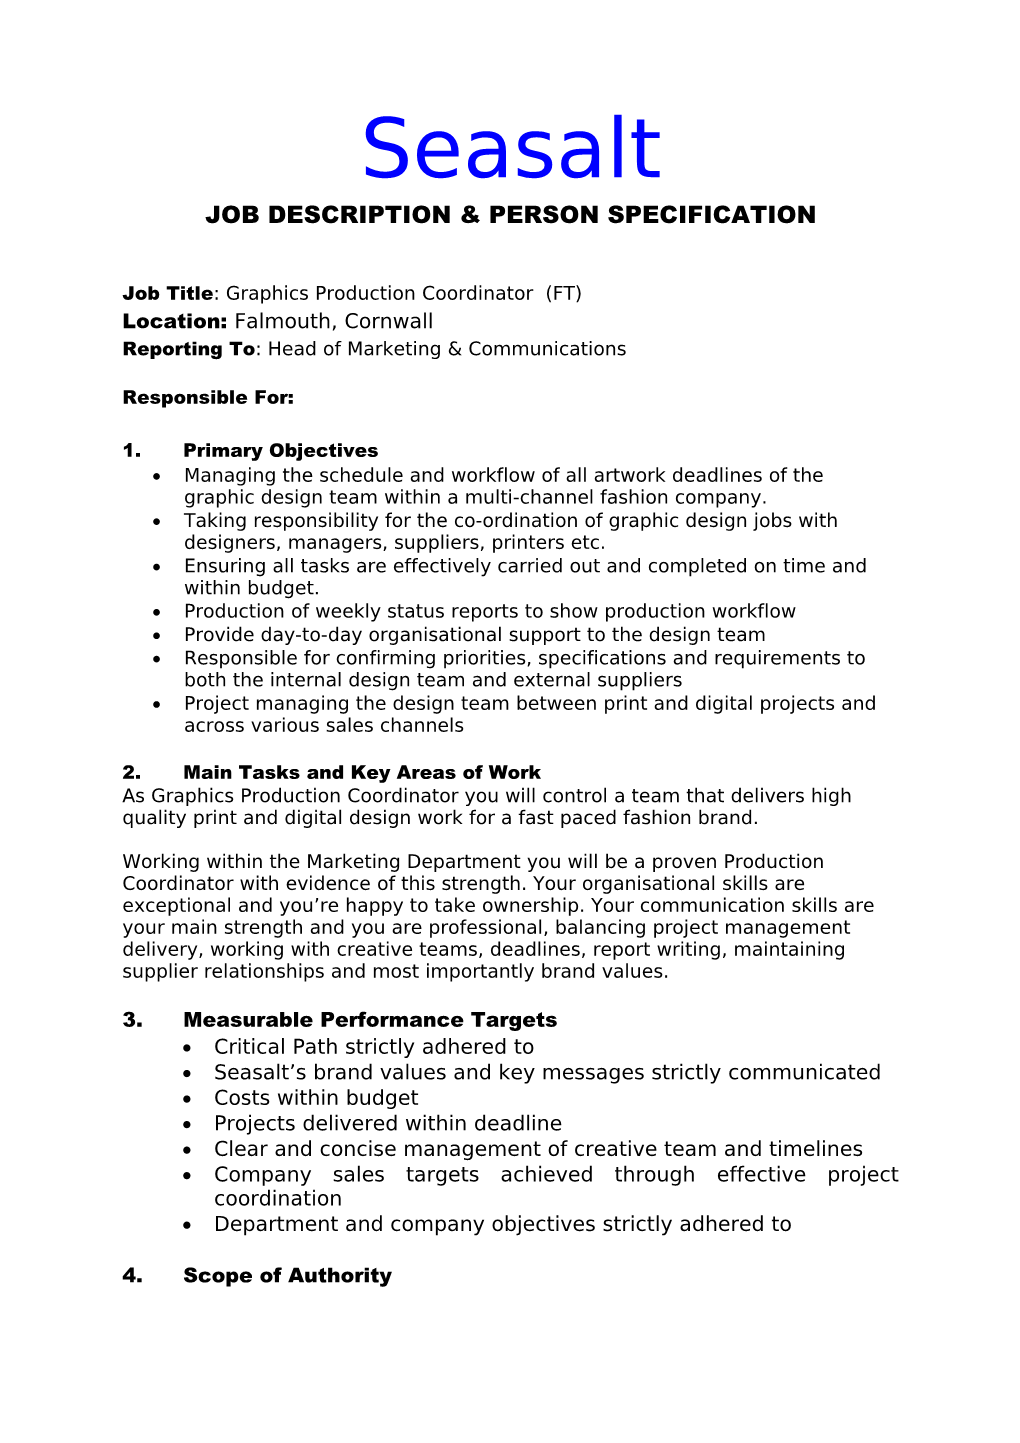 Job Description & Person Specification s7